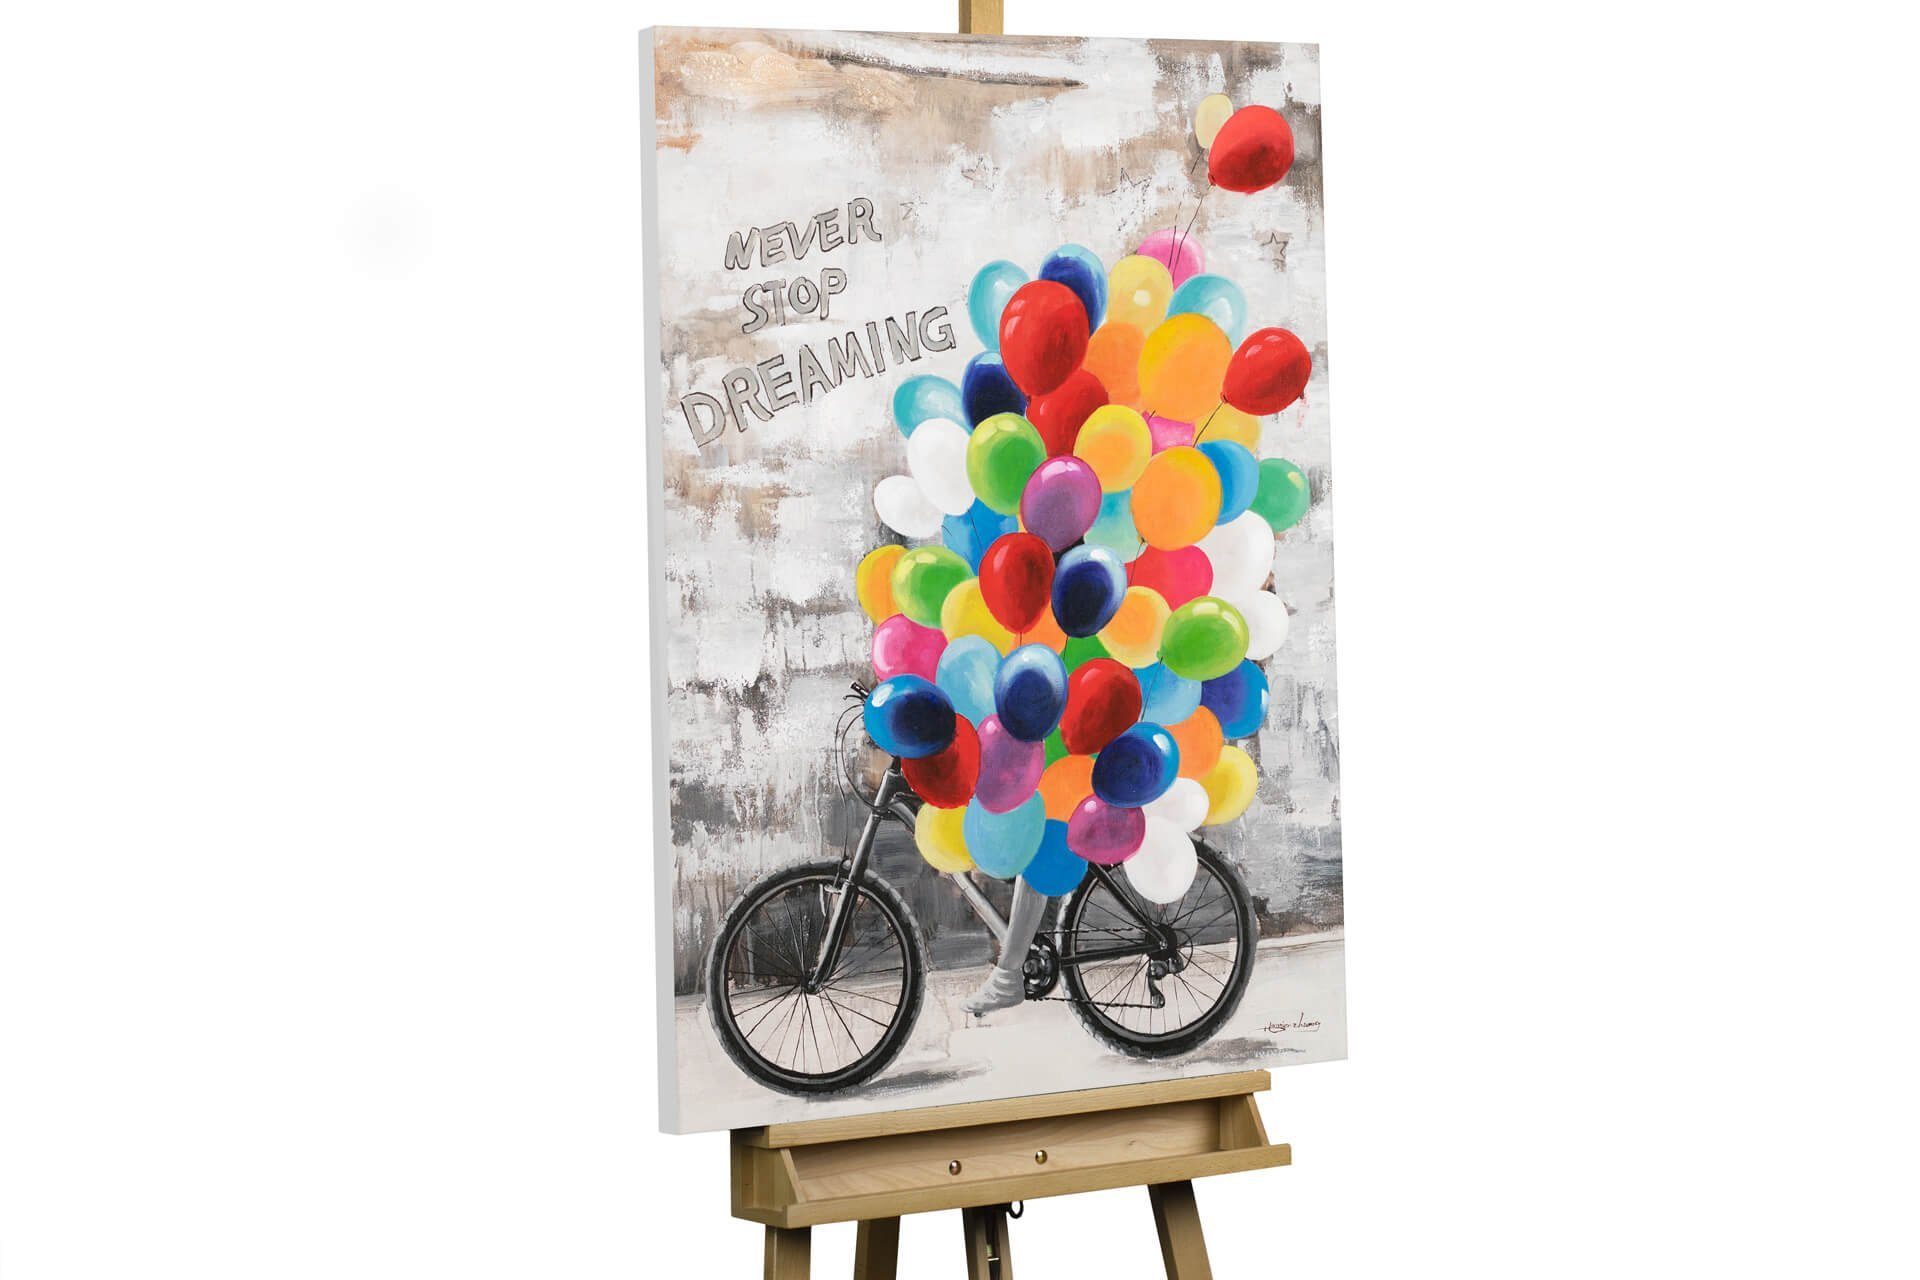 KUNSTLOFT Gemälde Bike Euphoria 70x100 cm, Leinwandbild 100% HANDGEMALT Wandbild Wohnzimmer